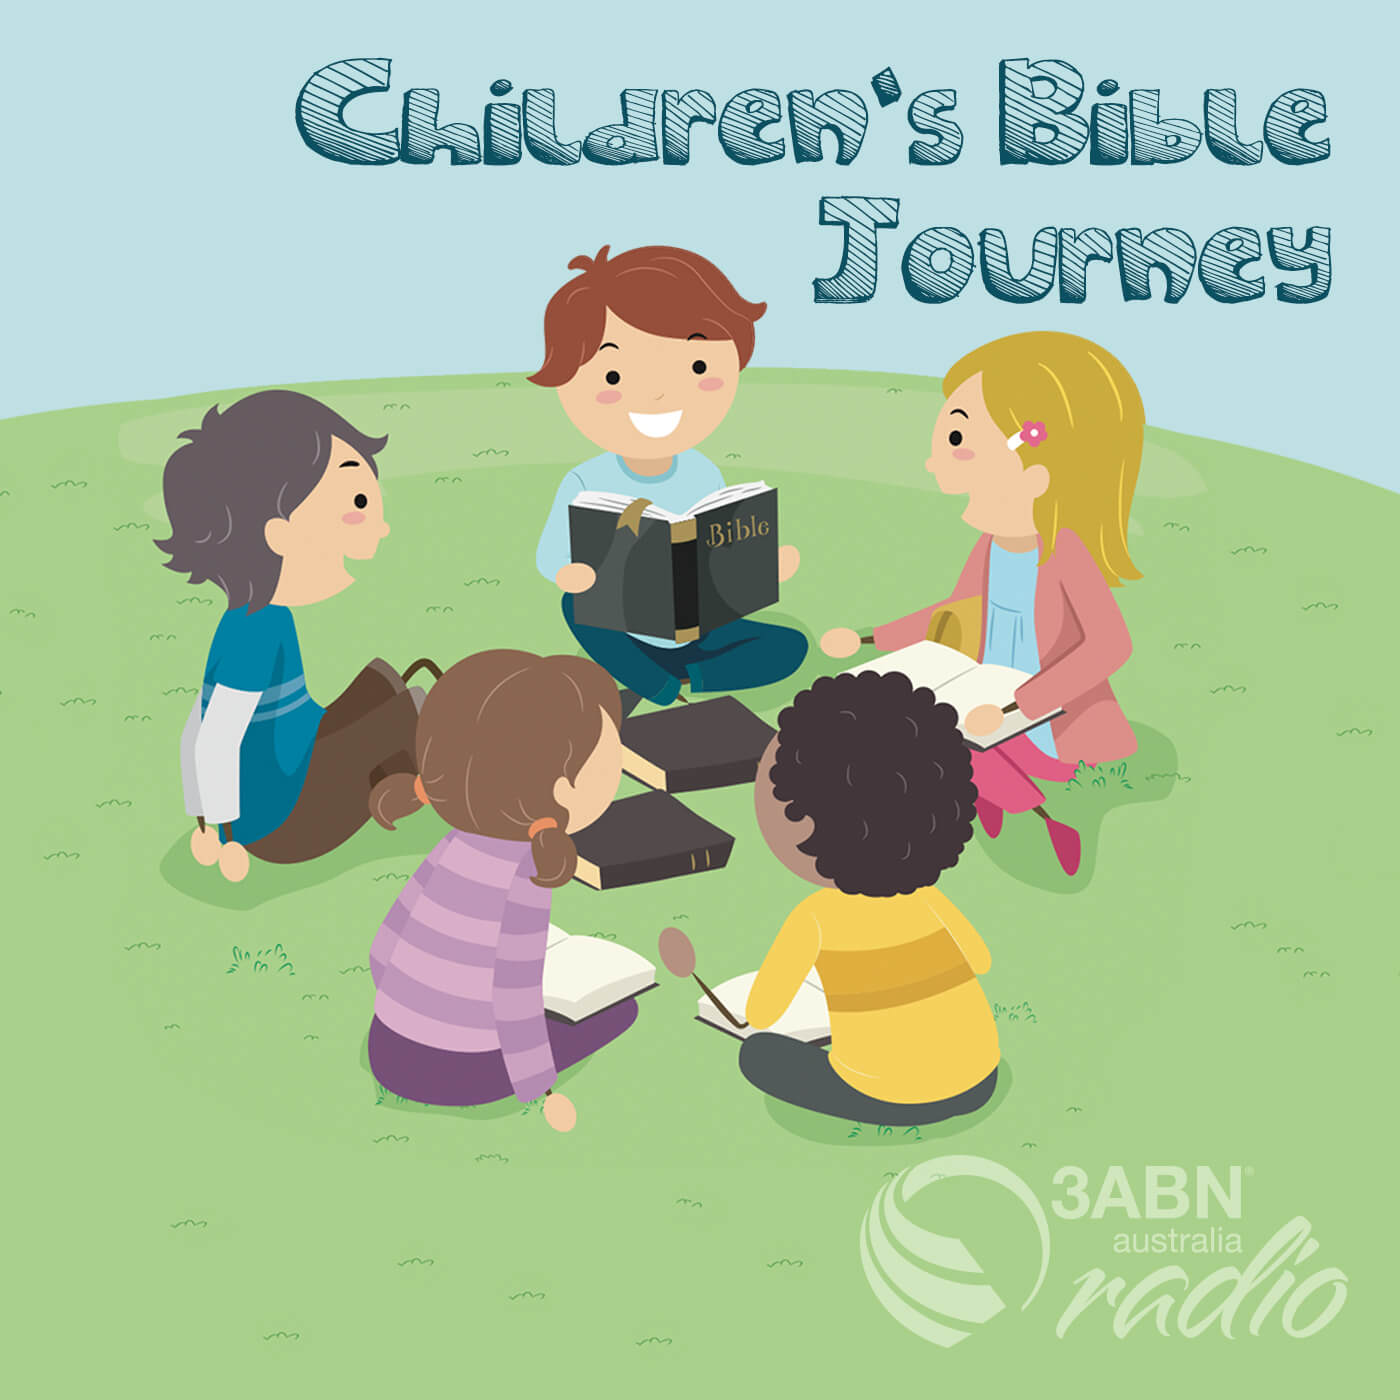 Children's Bible Journey - 2154